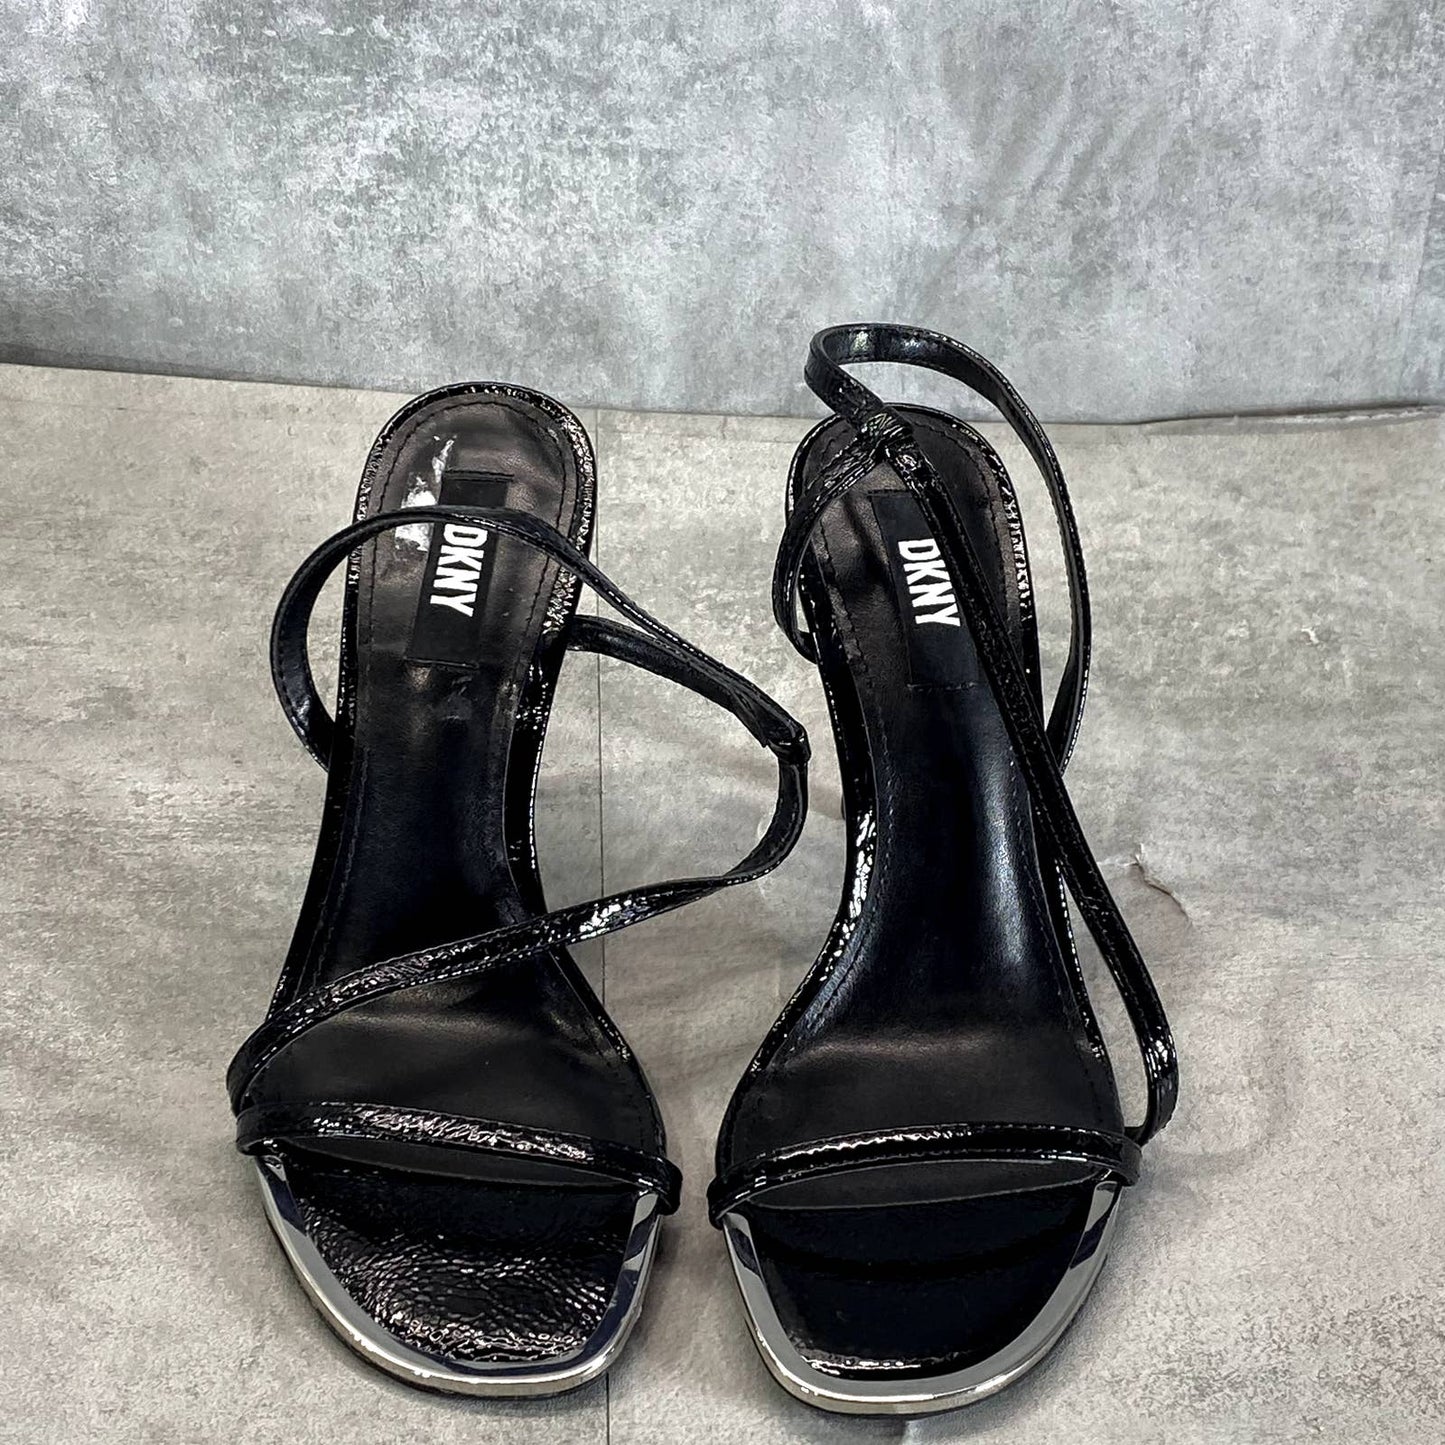 DKNY Women's Black Danielle Square-Toe Strappy Stiletto Dress Sandals SZ 7